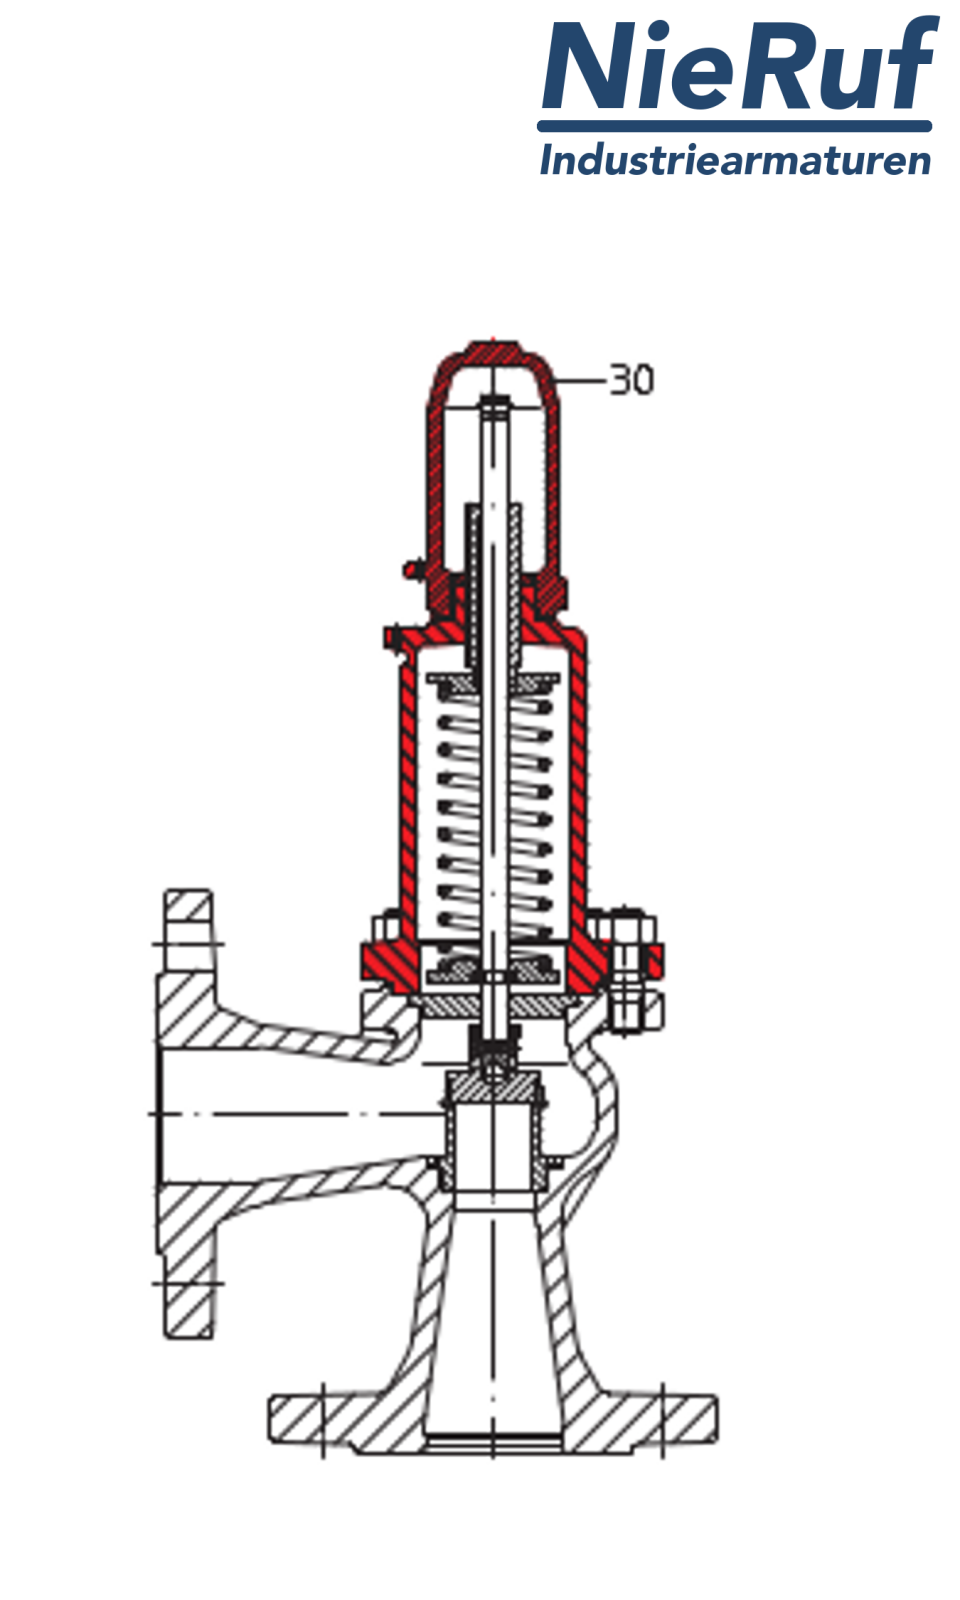 flange-safety valve DN32/DN32 SF0101, cast iron EN-JL1040 metal, without lever